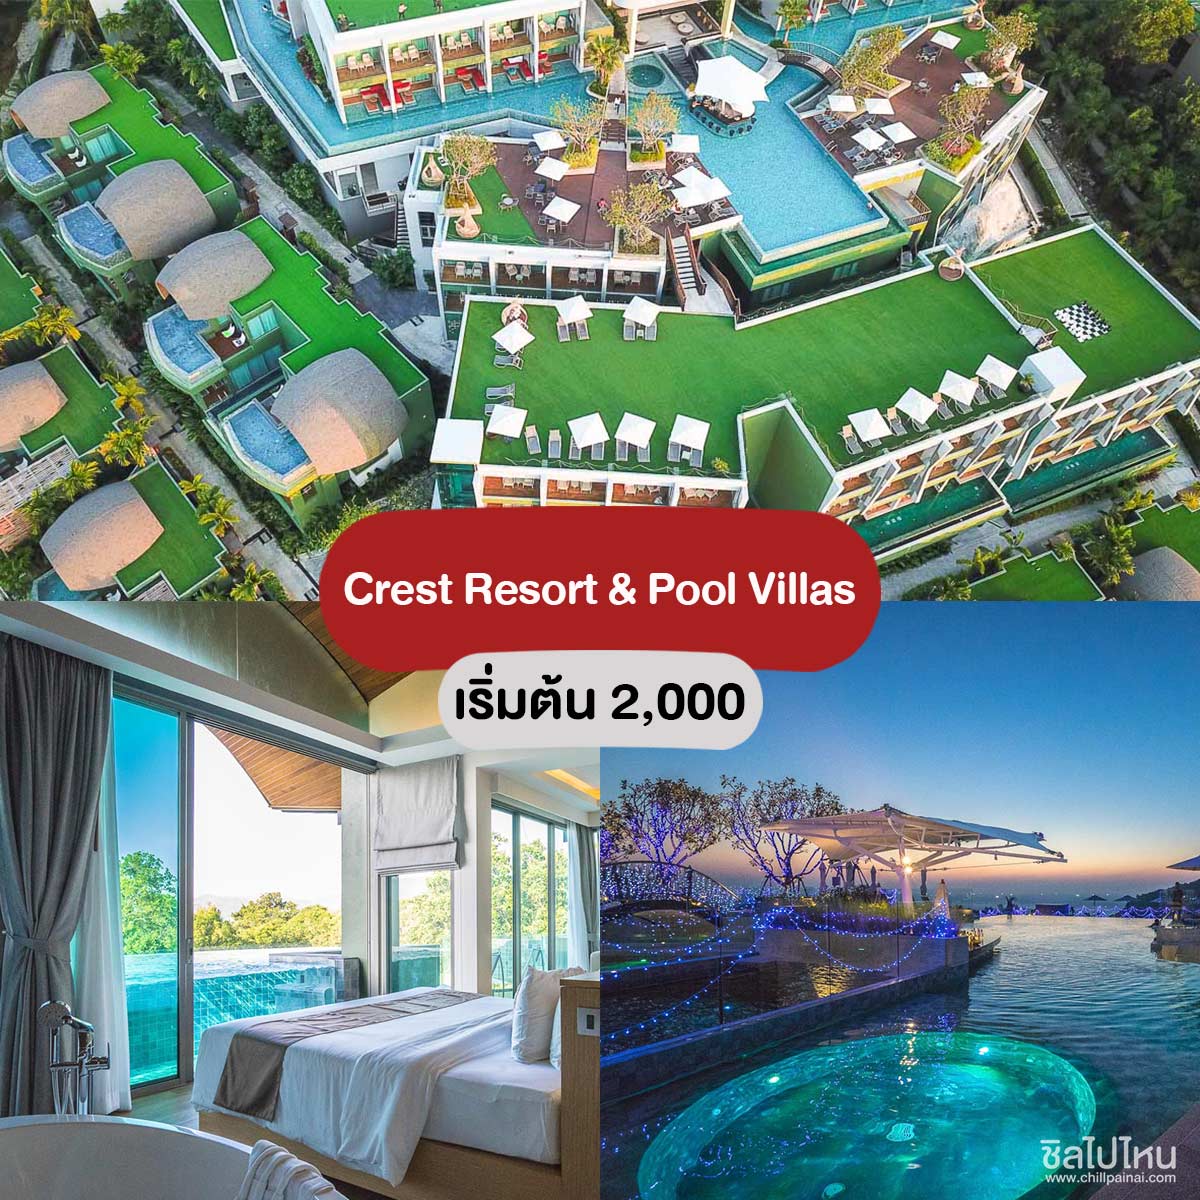 Crest Resort and Pool Villas Phuket - ที่พักภูเก็ตวิวทะเล